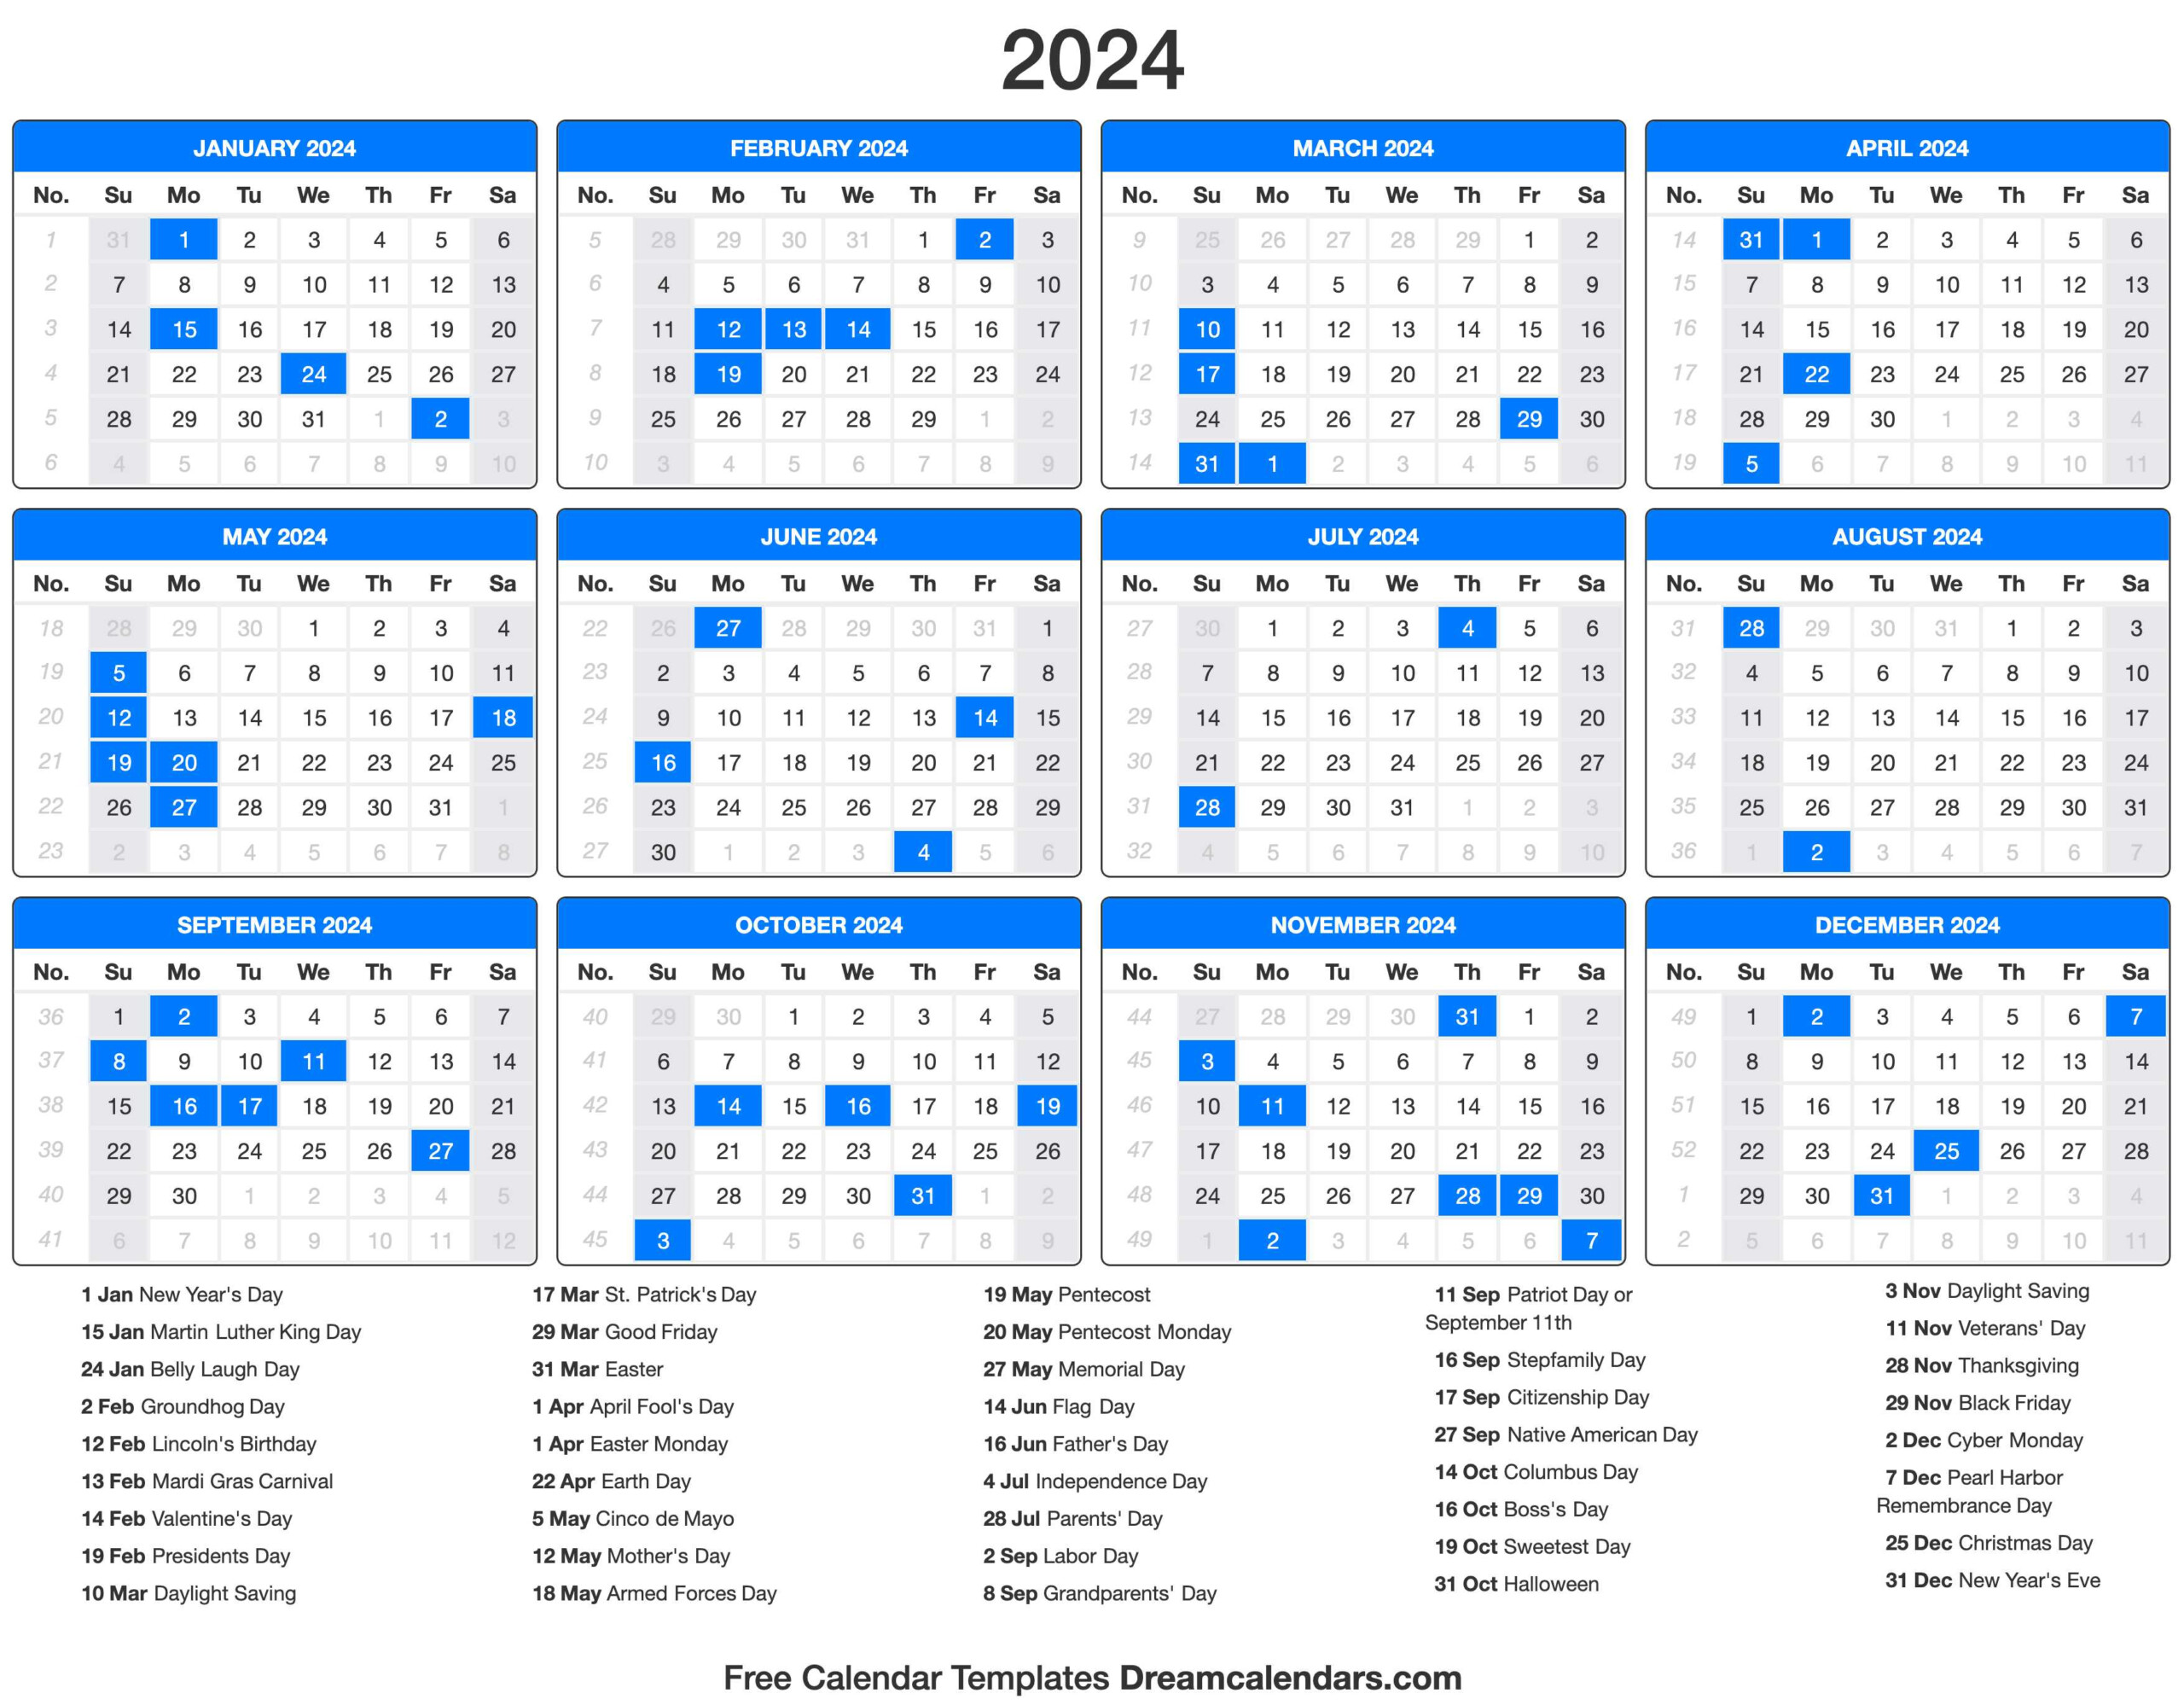 printable calendars 2024 pdf calendar 2024 with federal holidays